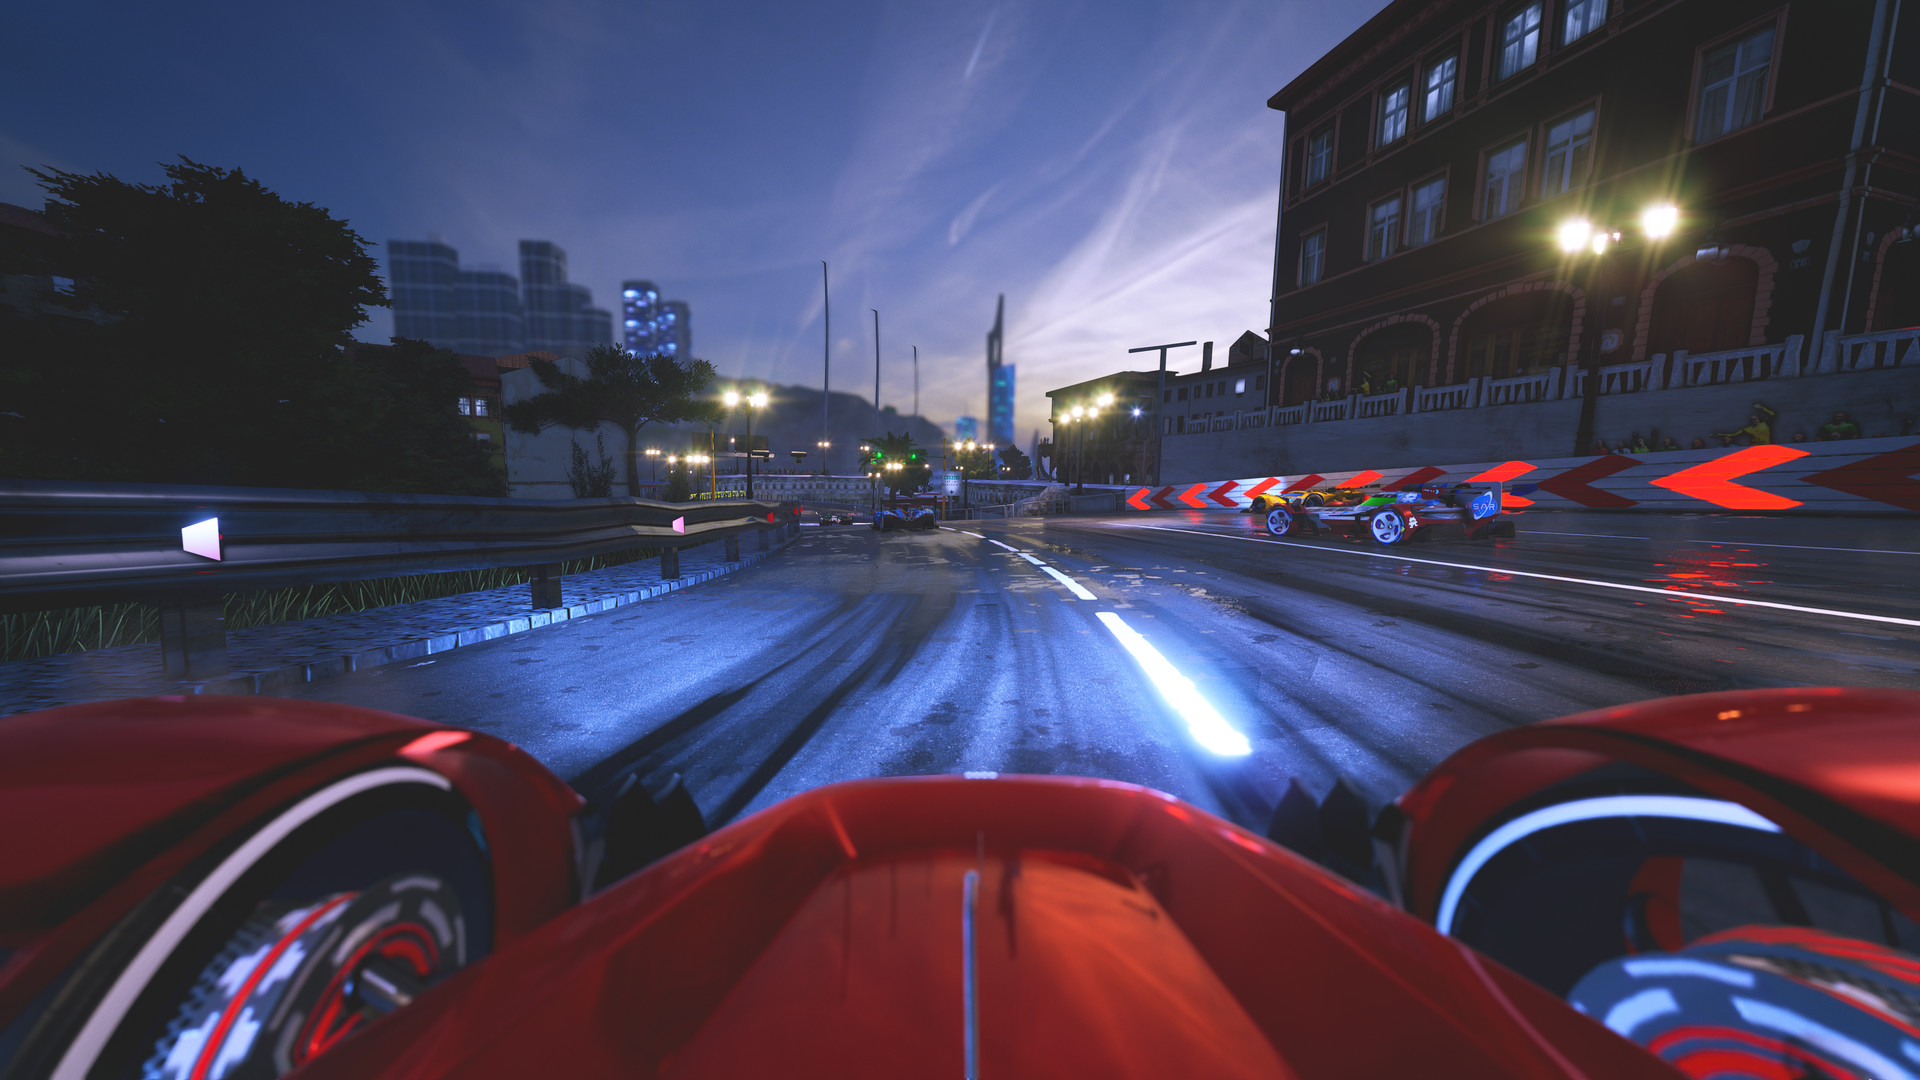 Xenon Racer on Steam